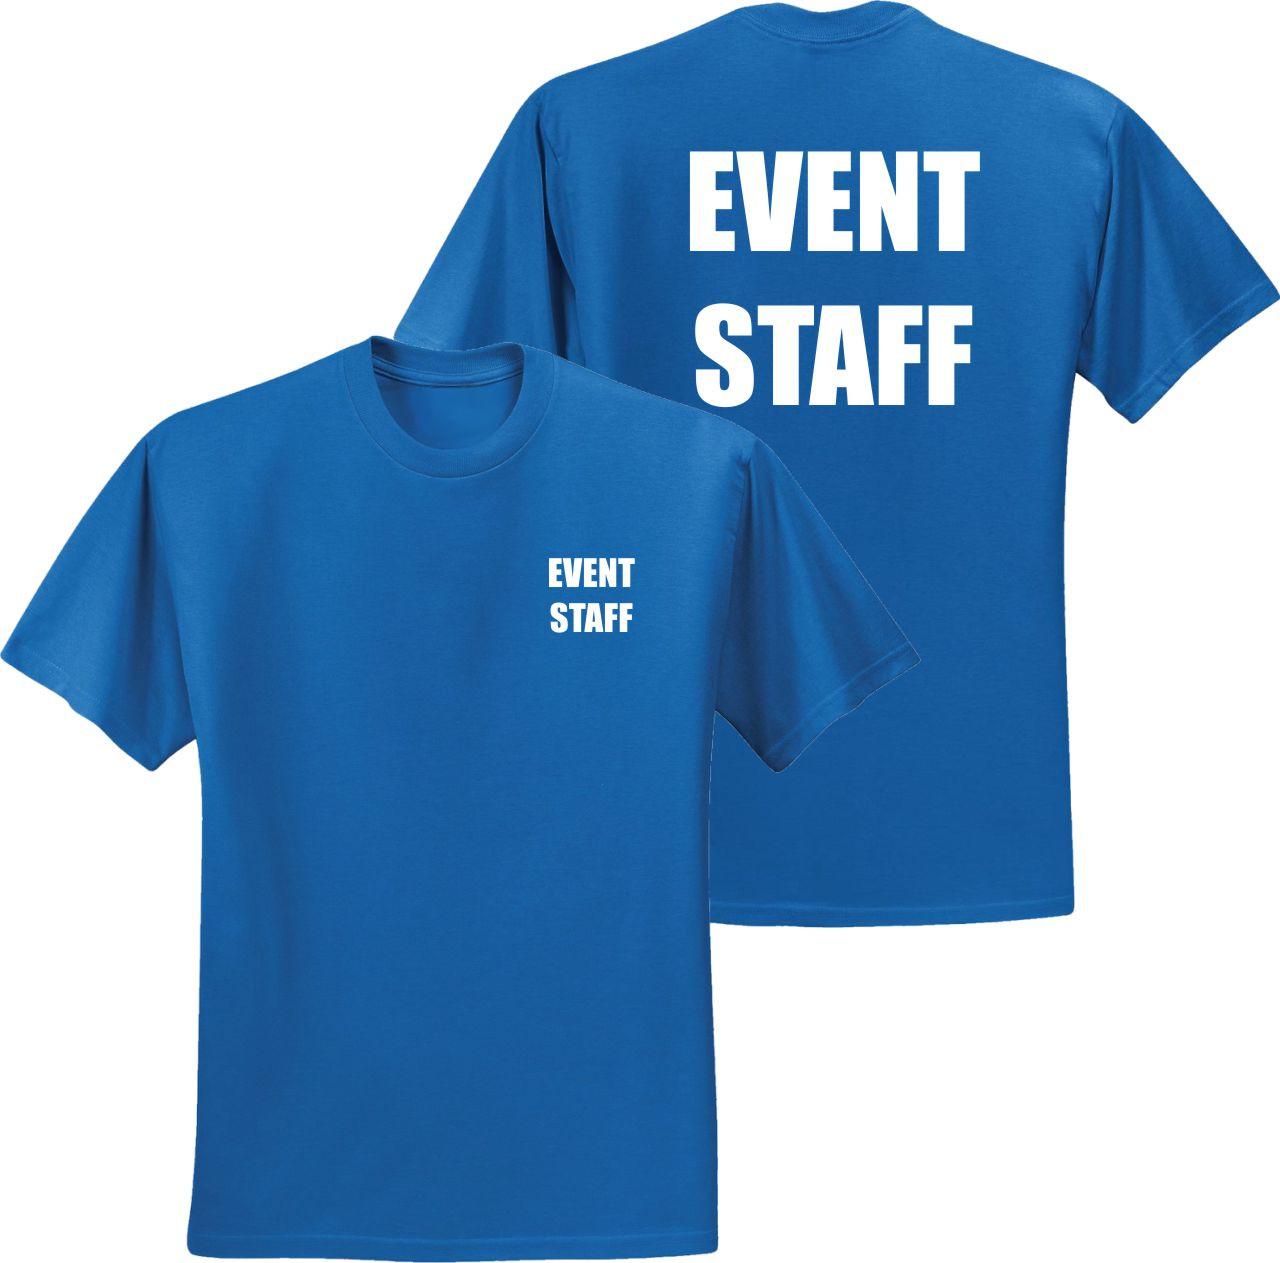 EVENT STAFF Royal Blue Pre Printed T Shirt | Event Staff Blue Uniform Shirt | Event Staff Tee Royal Blue